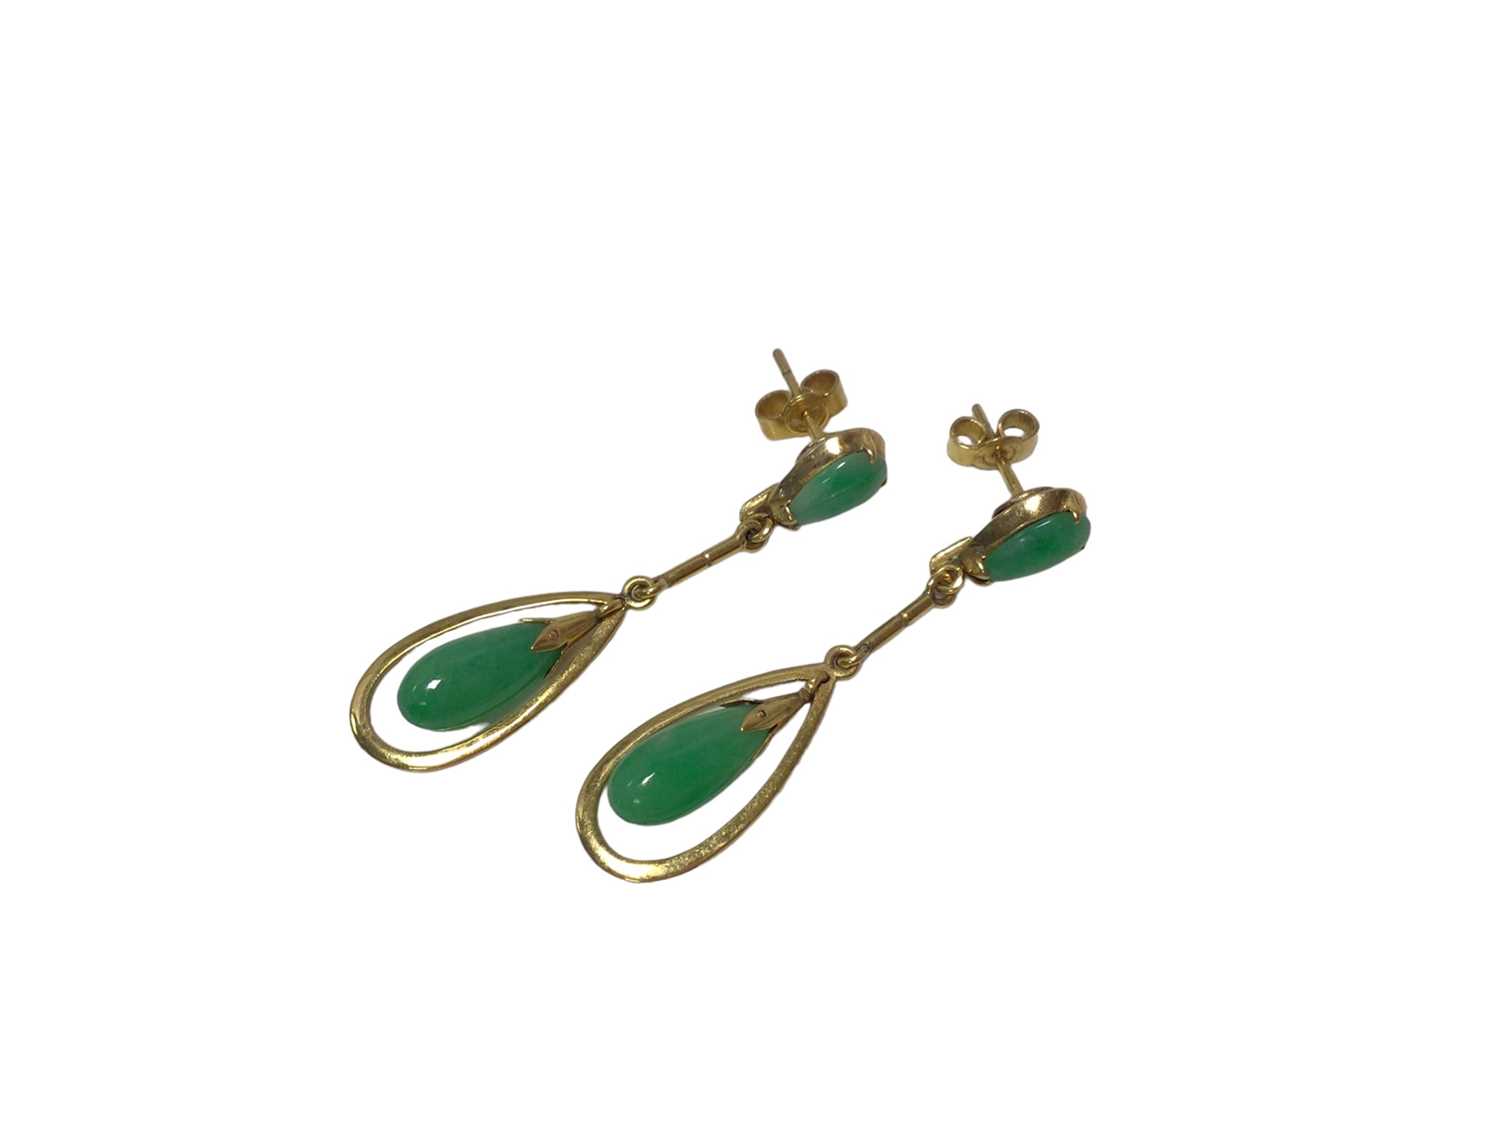 Pair of jade and gold pendant earrings